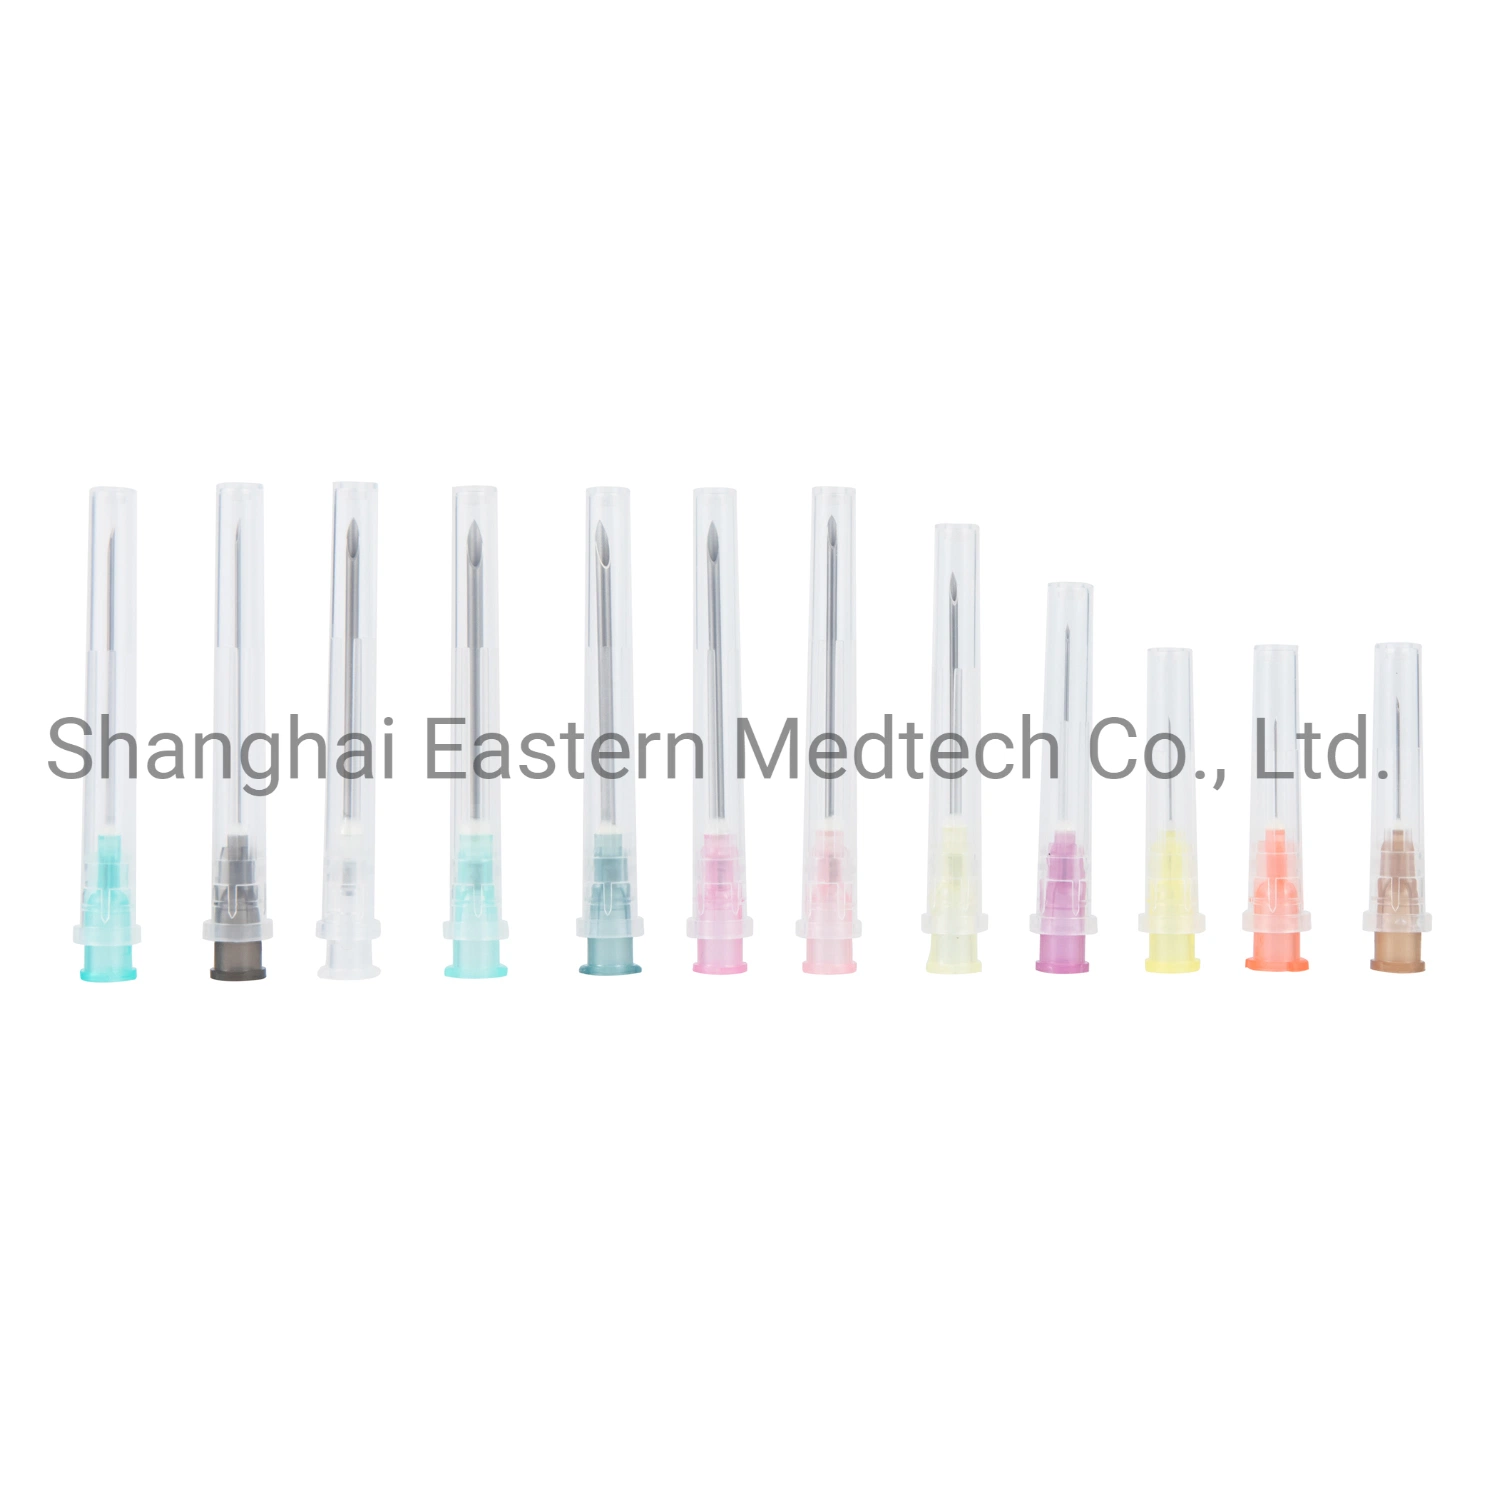 China Großhandel medizinische Geräte, CE ISO Krankenhaus Instrument Spritze Nadel, Einweg sterile Injektionsnadel hypodermic 10g-34g